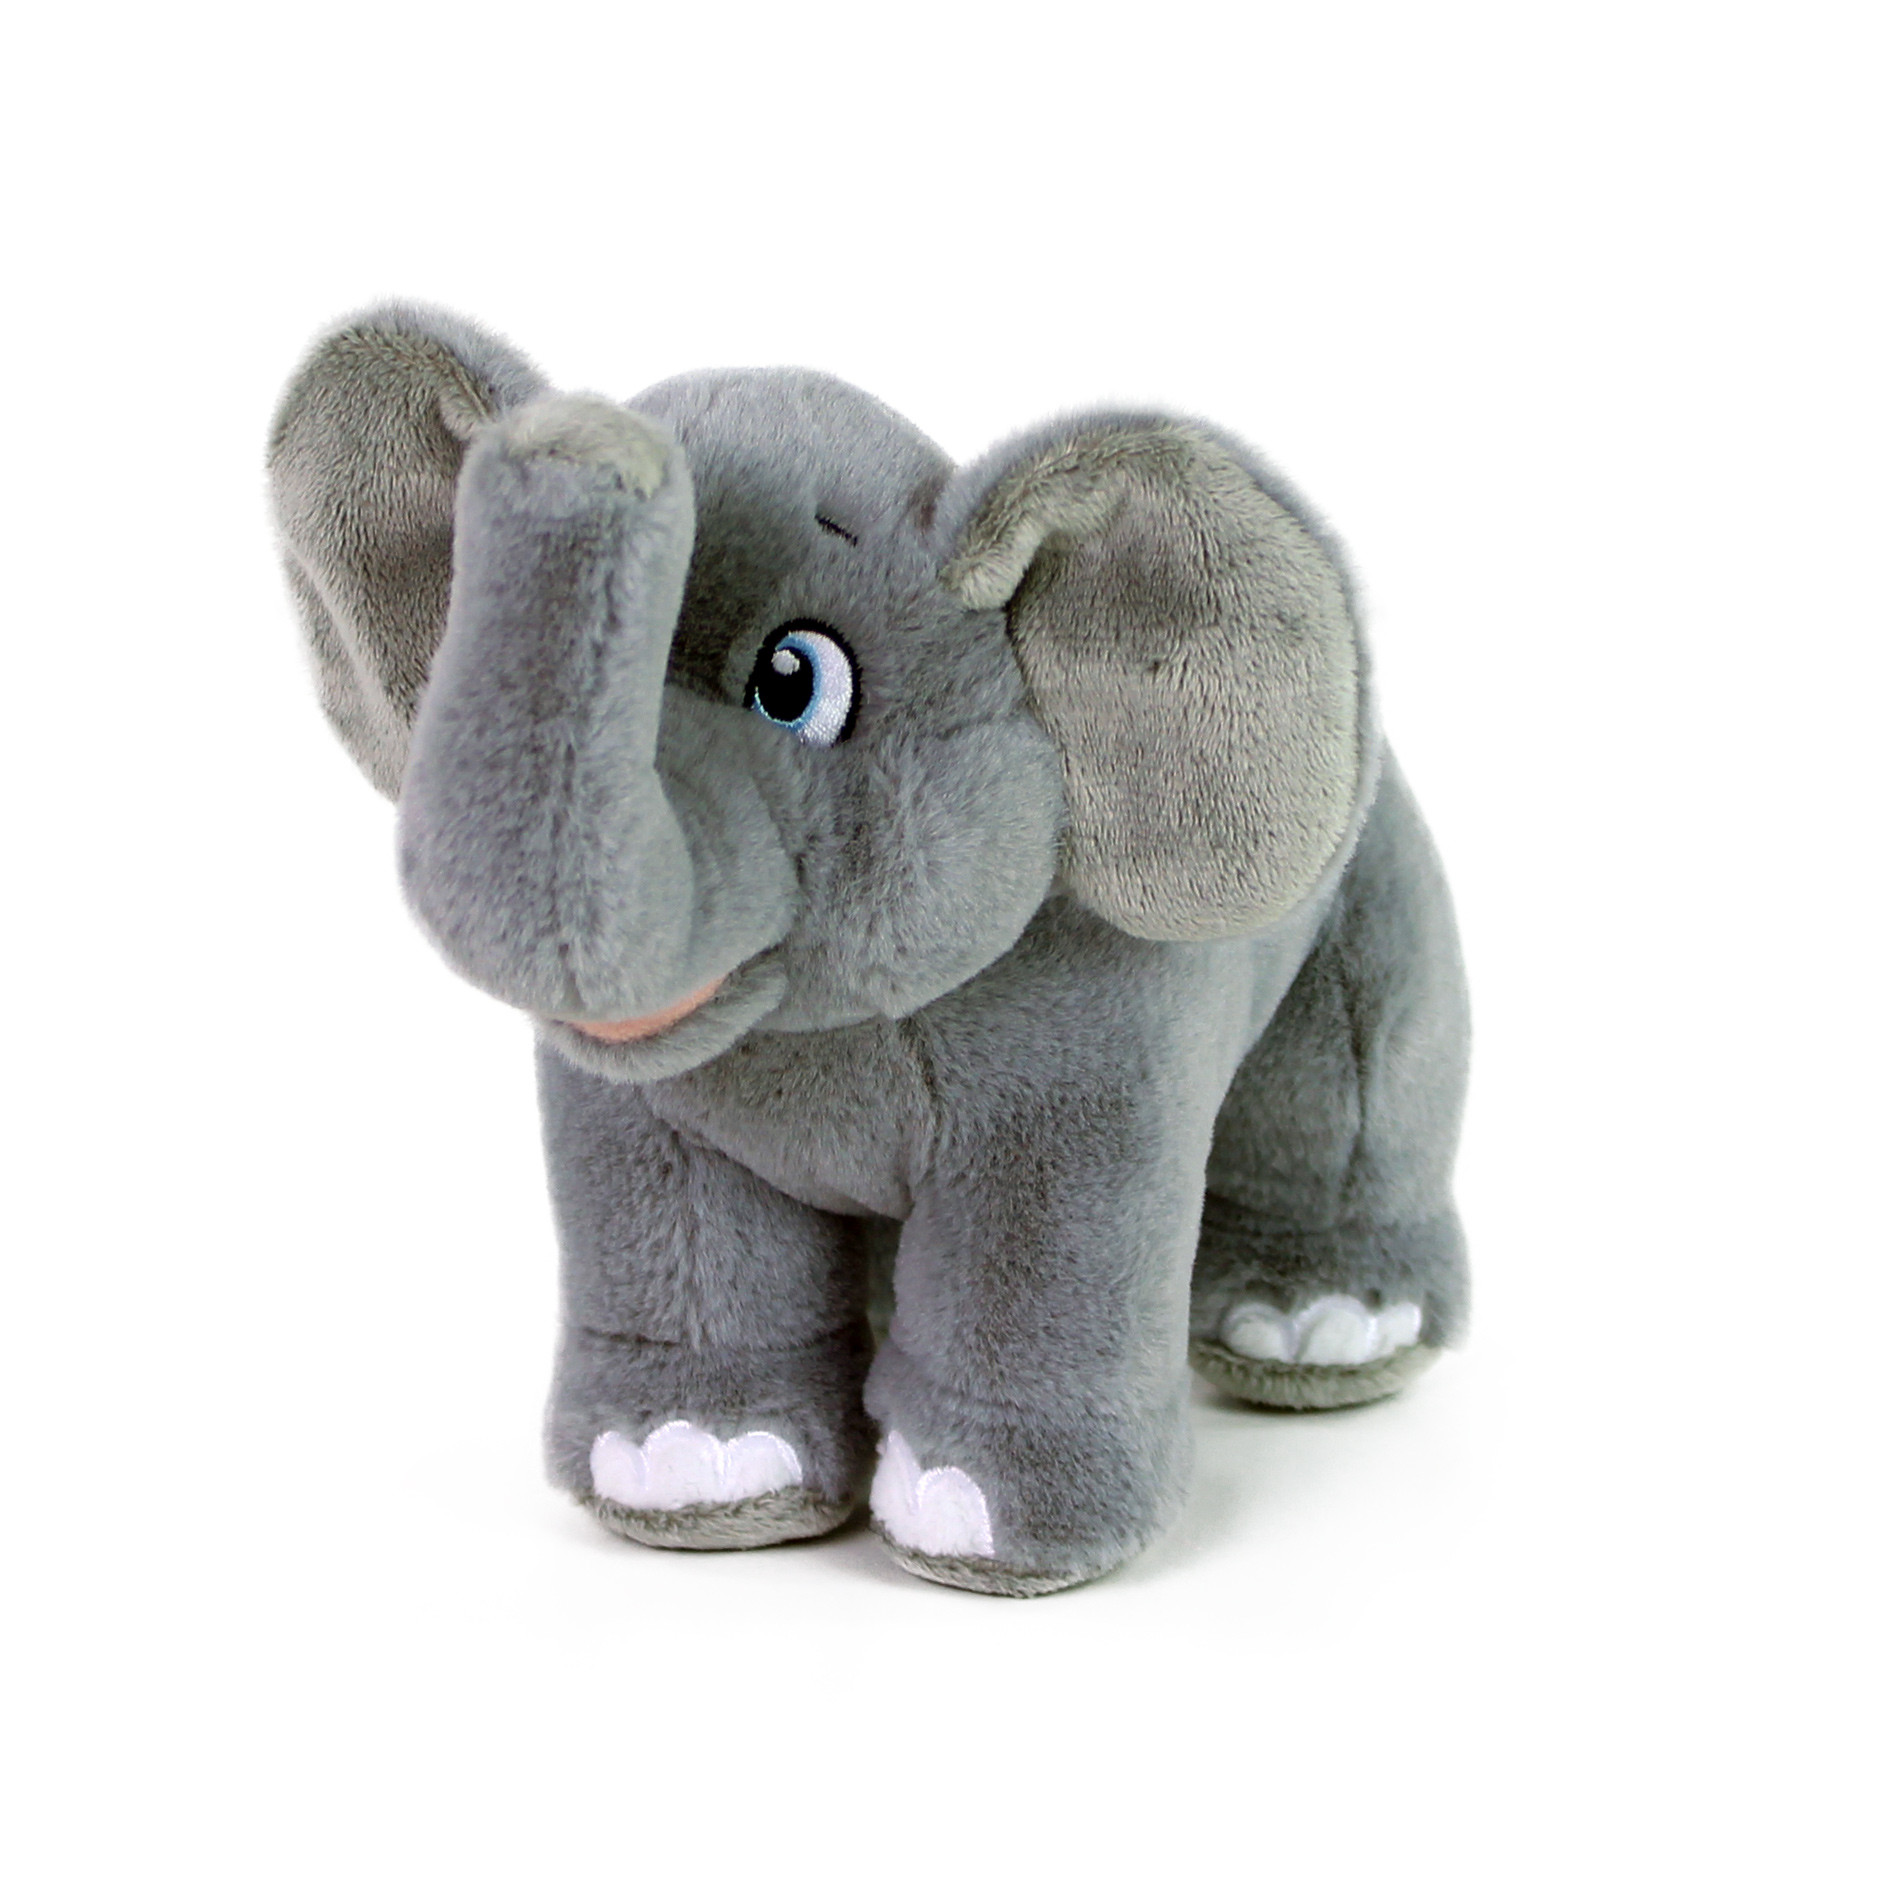 Plush elephant 24 cm